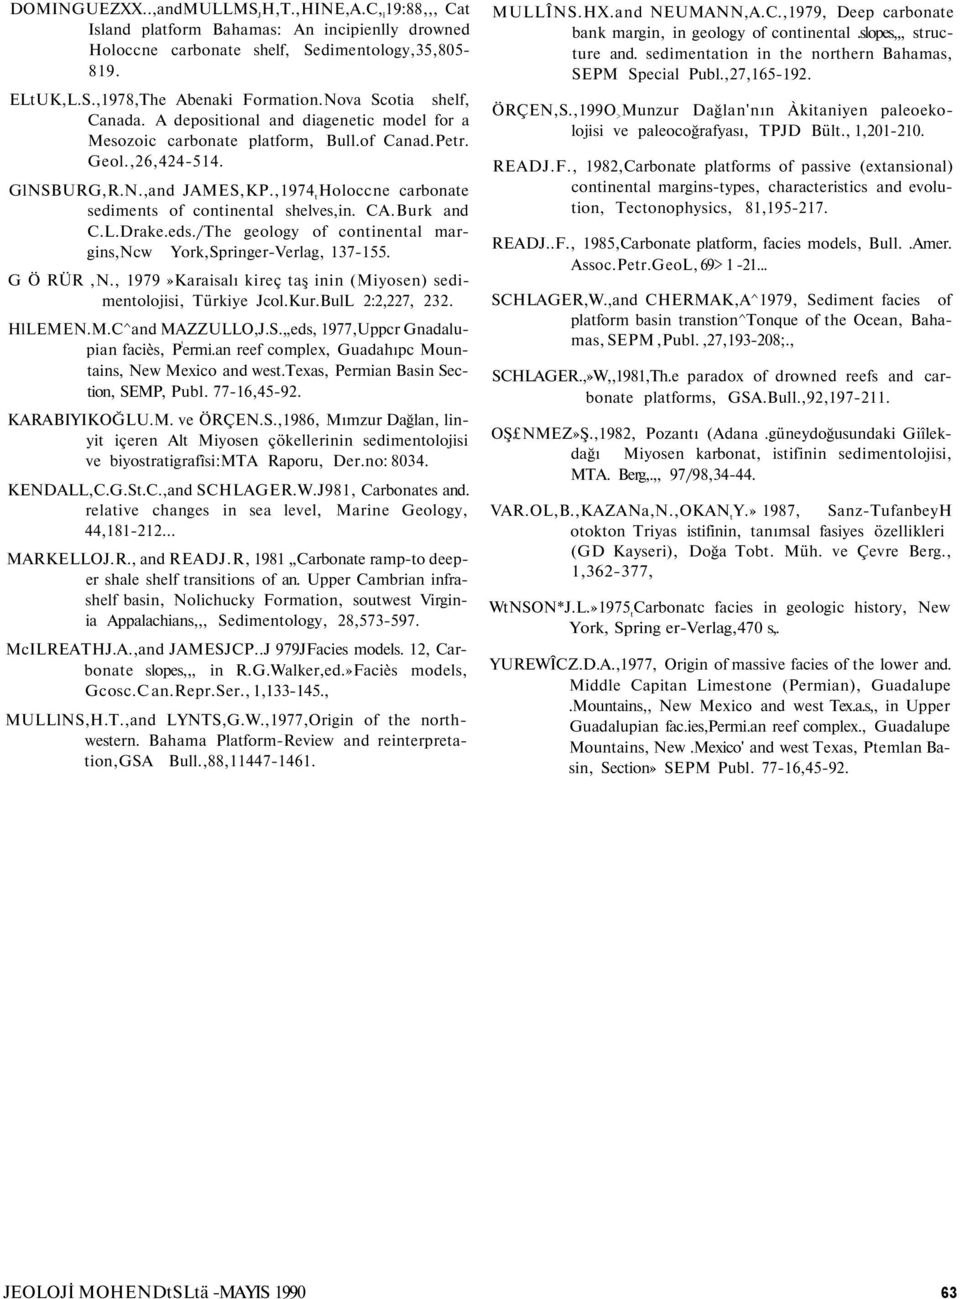 ,1974 t Holoccne carbonate sediments of continental shelves,in. CA.Burk and C.L.Drake.eds./The geology of continental margins,ncw York,Springer-Verlag, 137-155. G Ö RÜR,N.